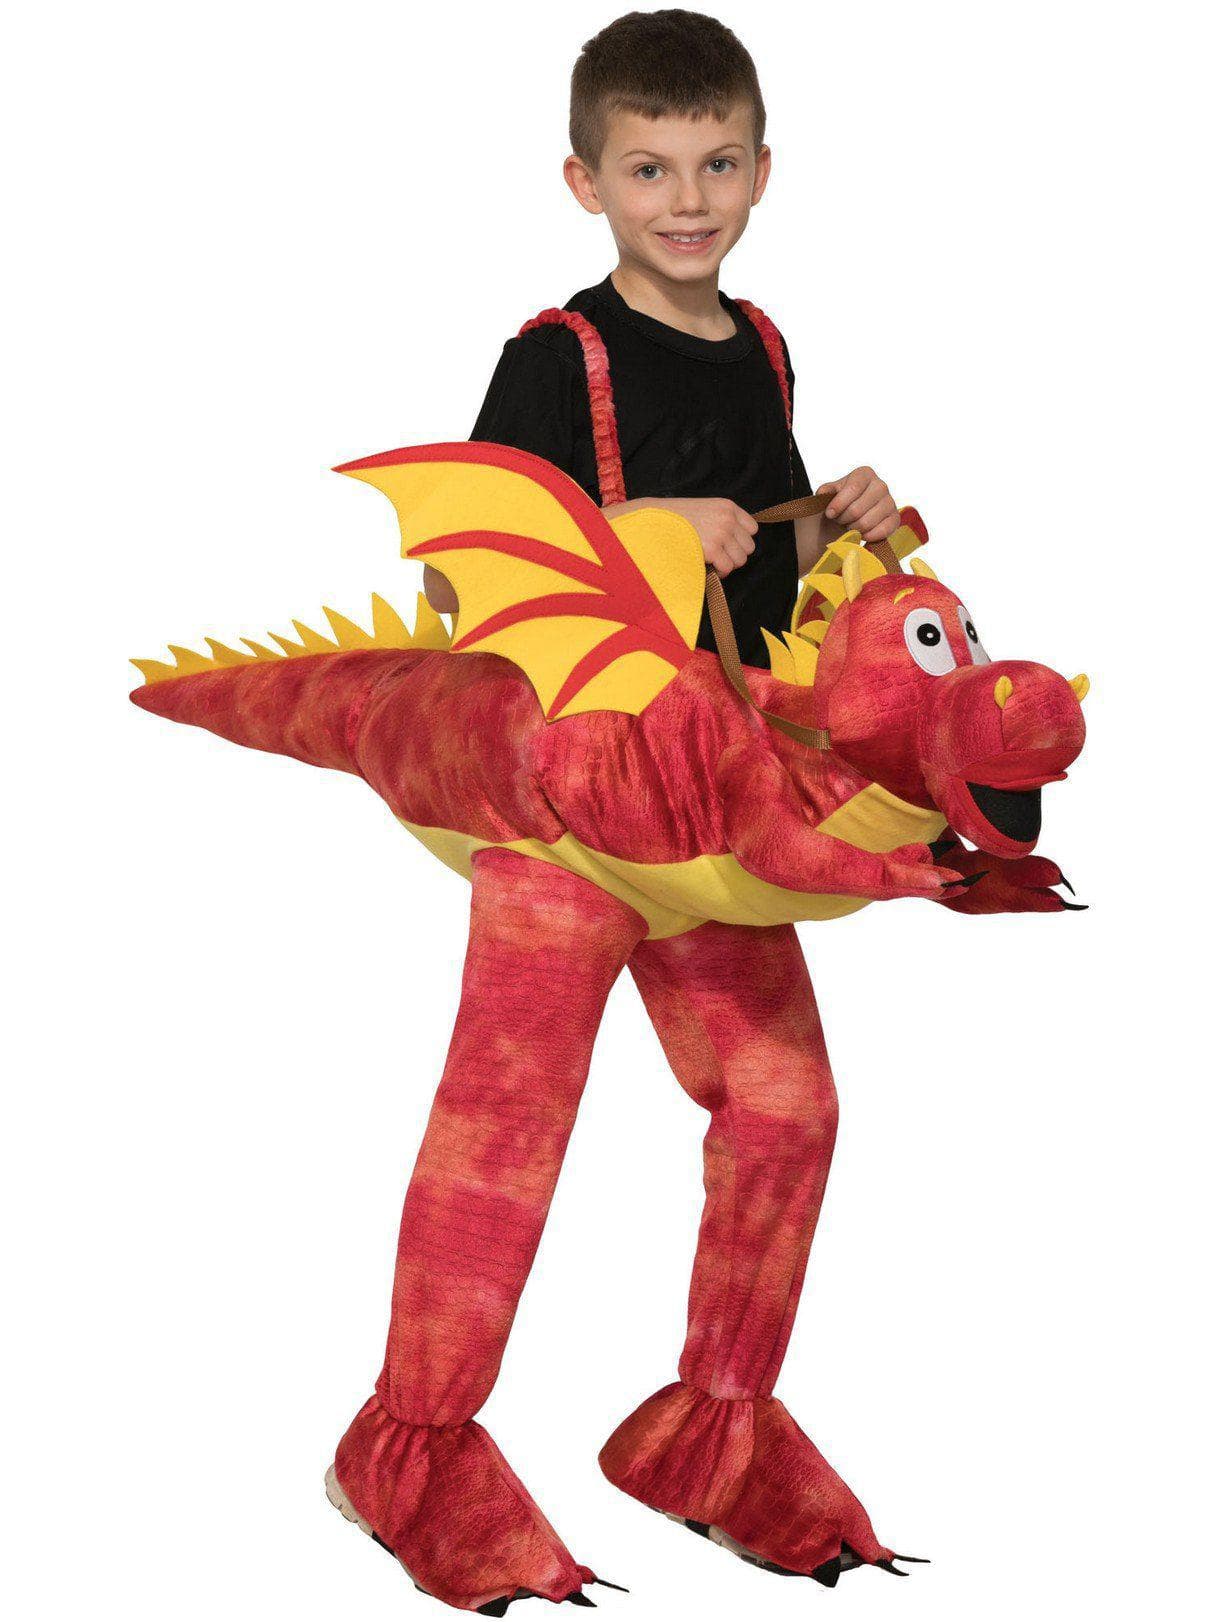 Kid's Ride-A-Dragon Costume - costumes.com